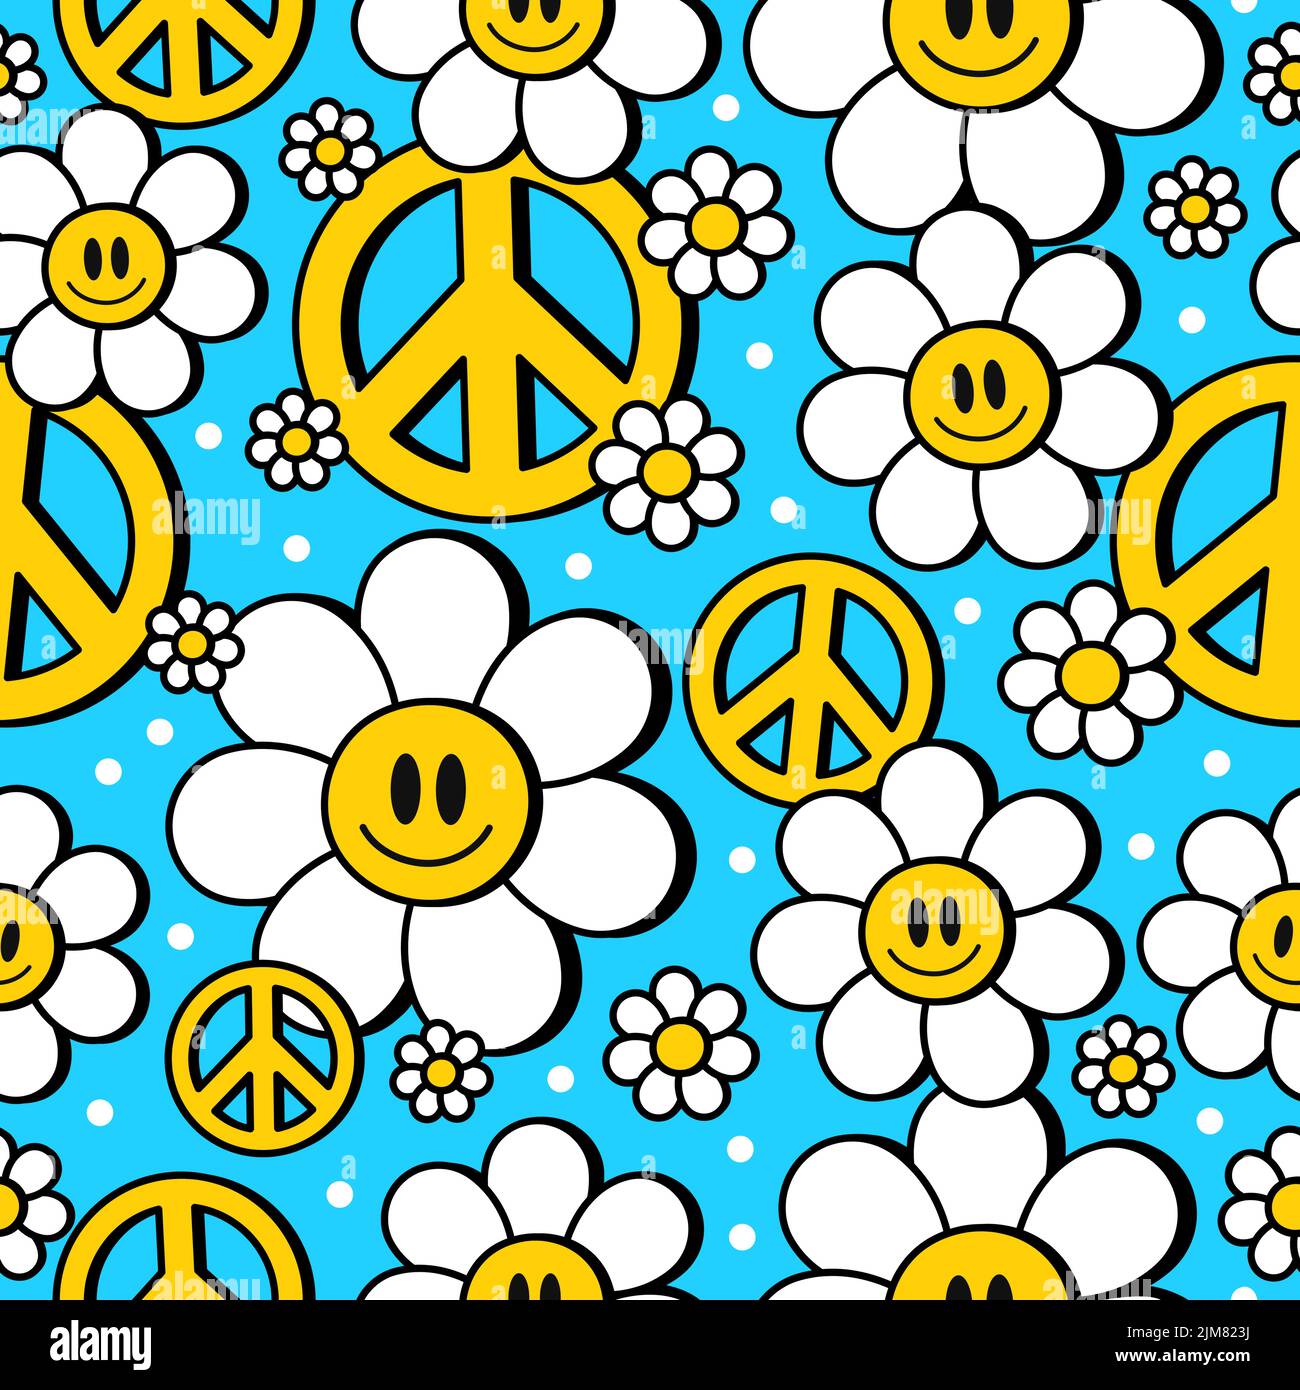 hippie symbols tumblr